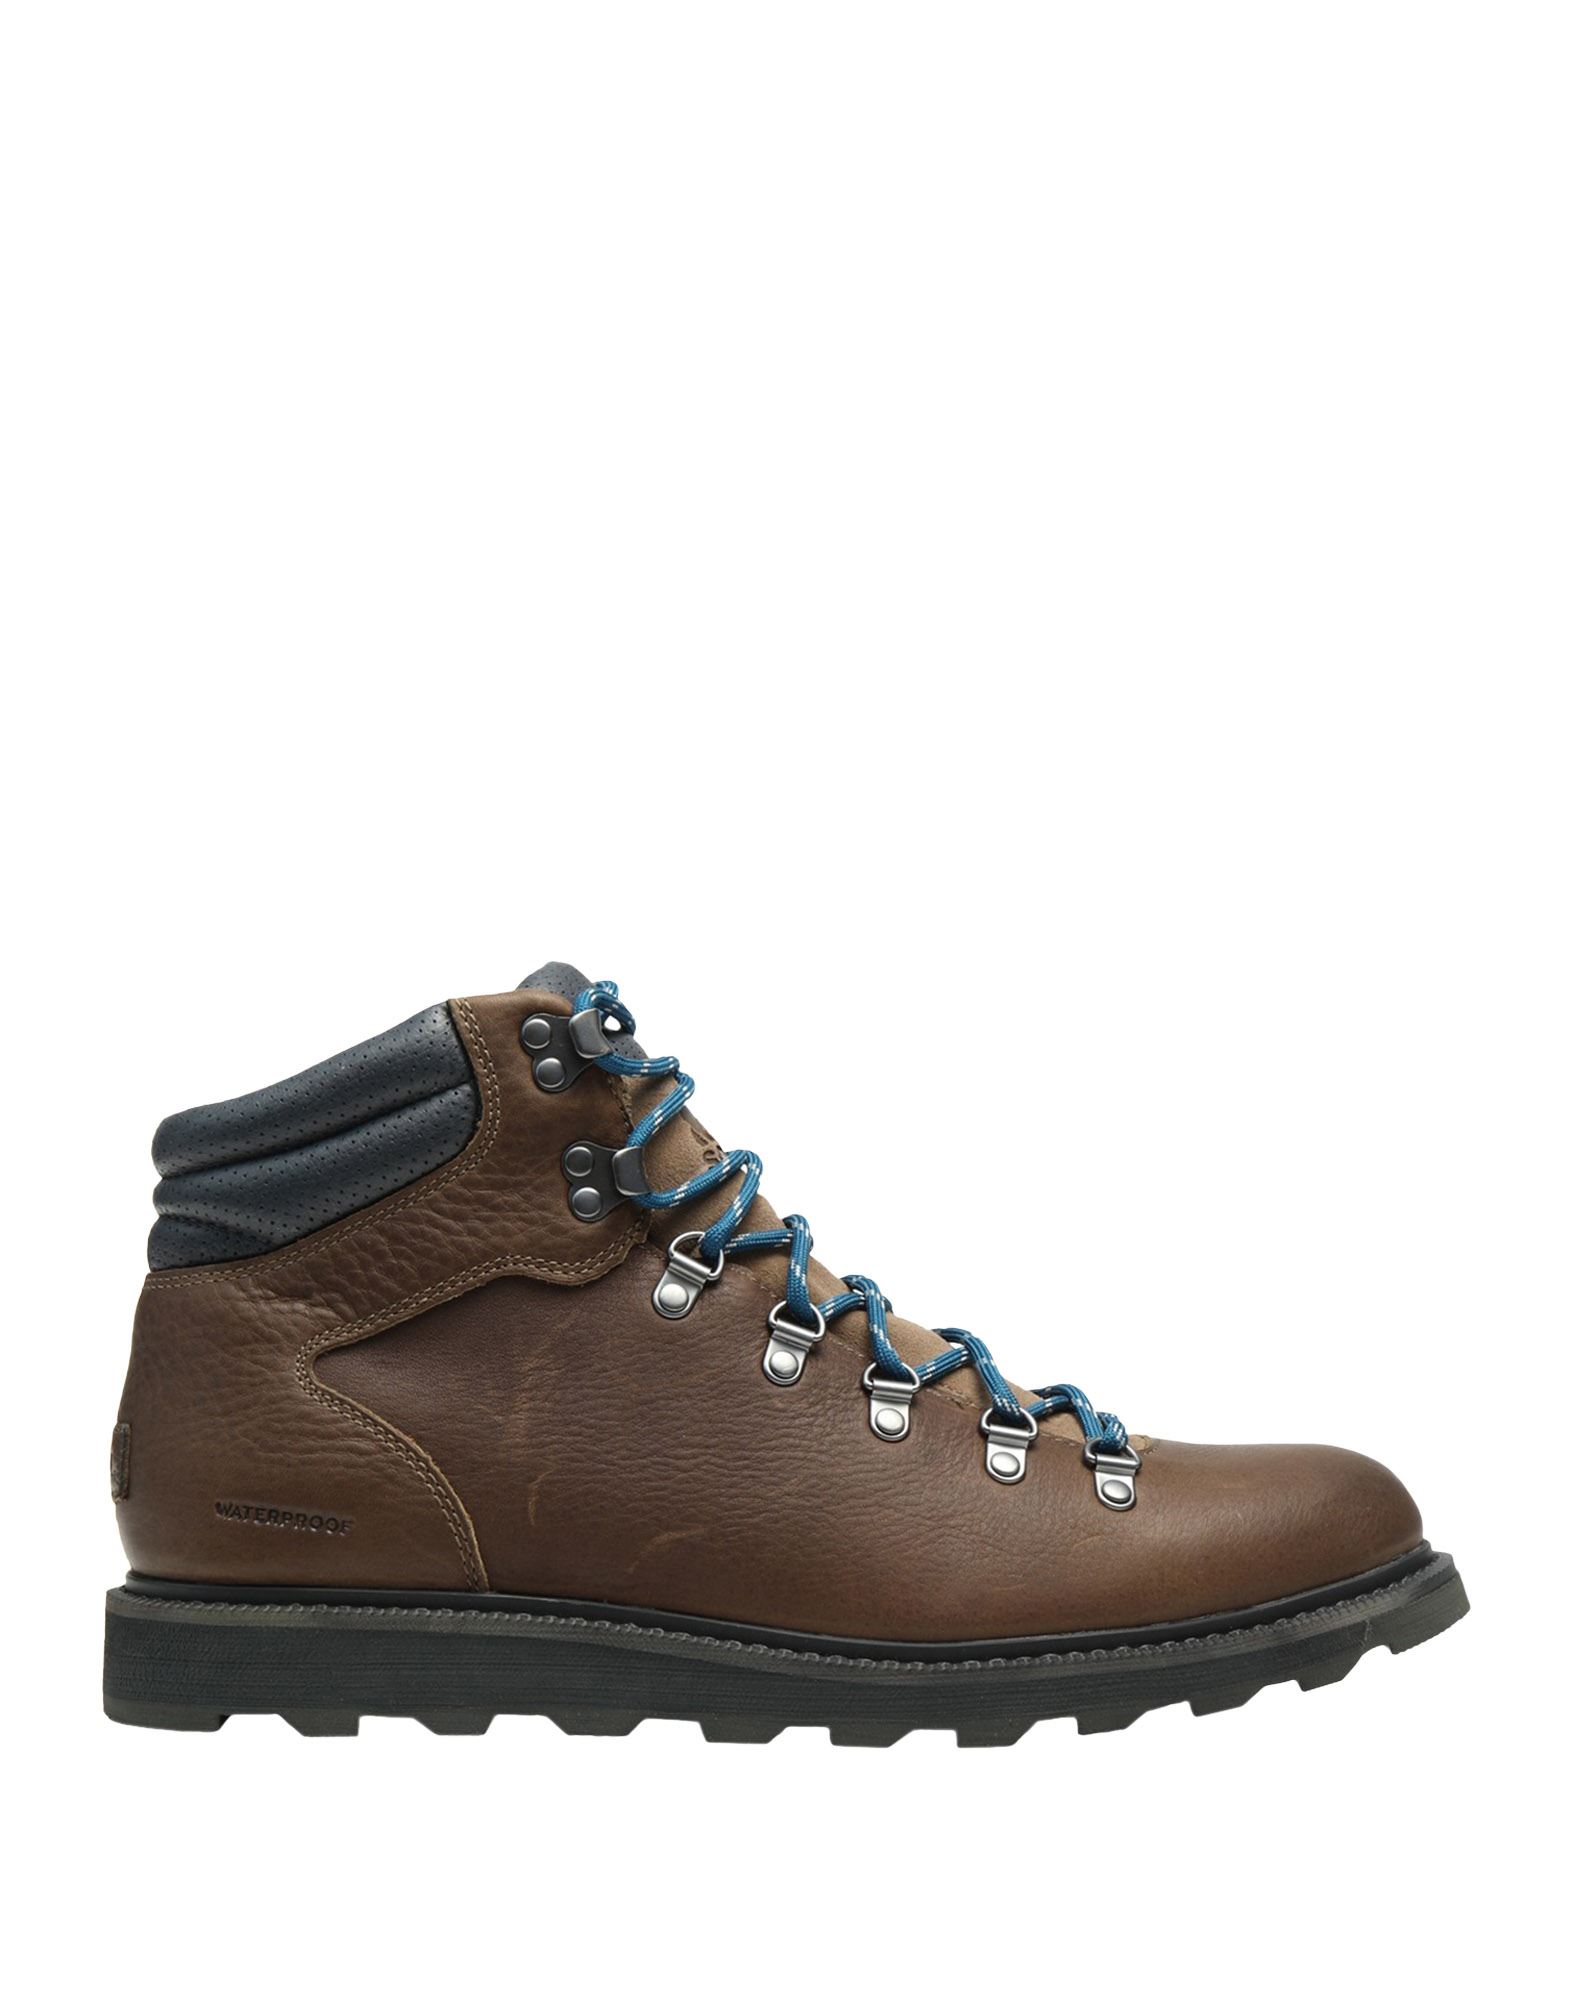 SOREL Ankle boots - Item 11957792